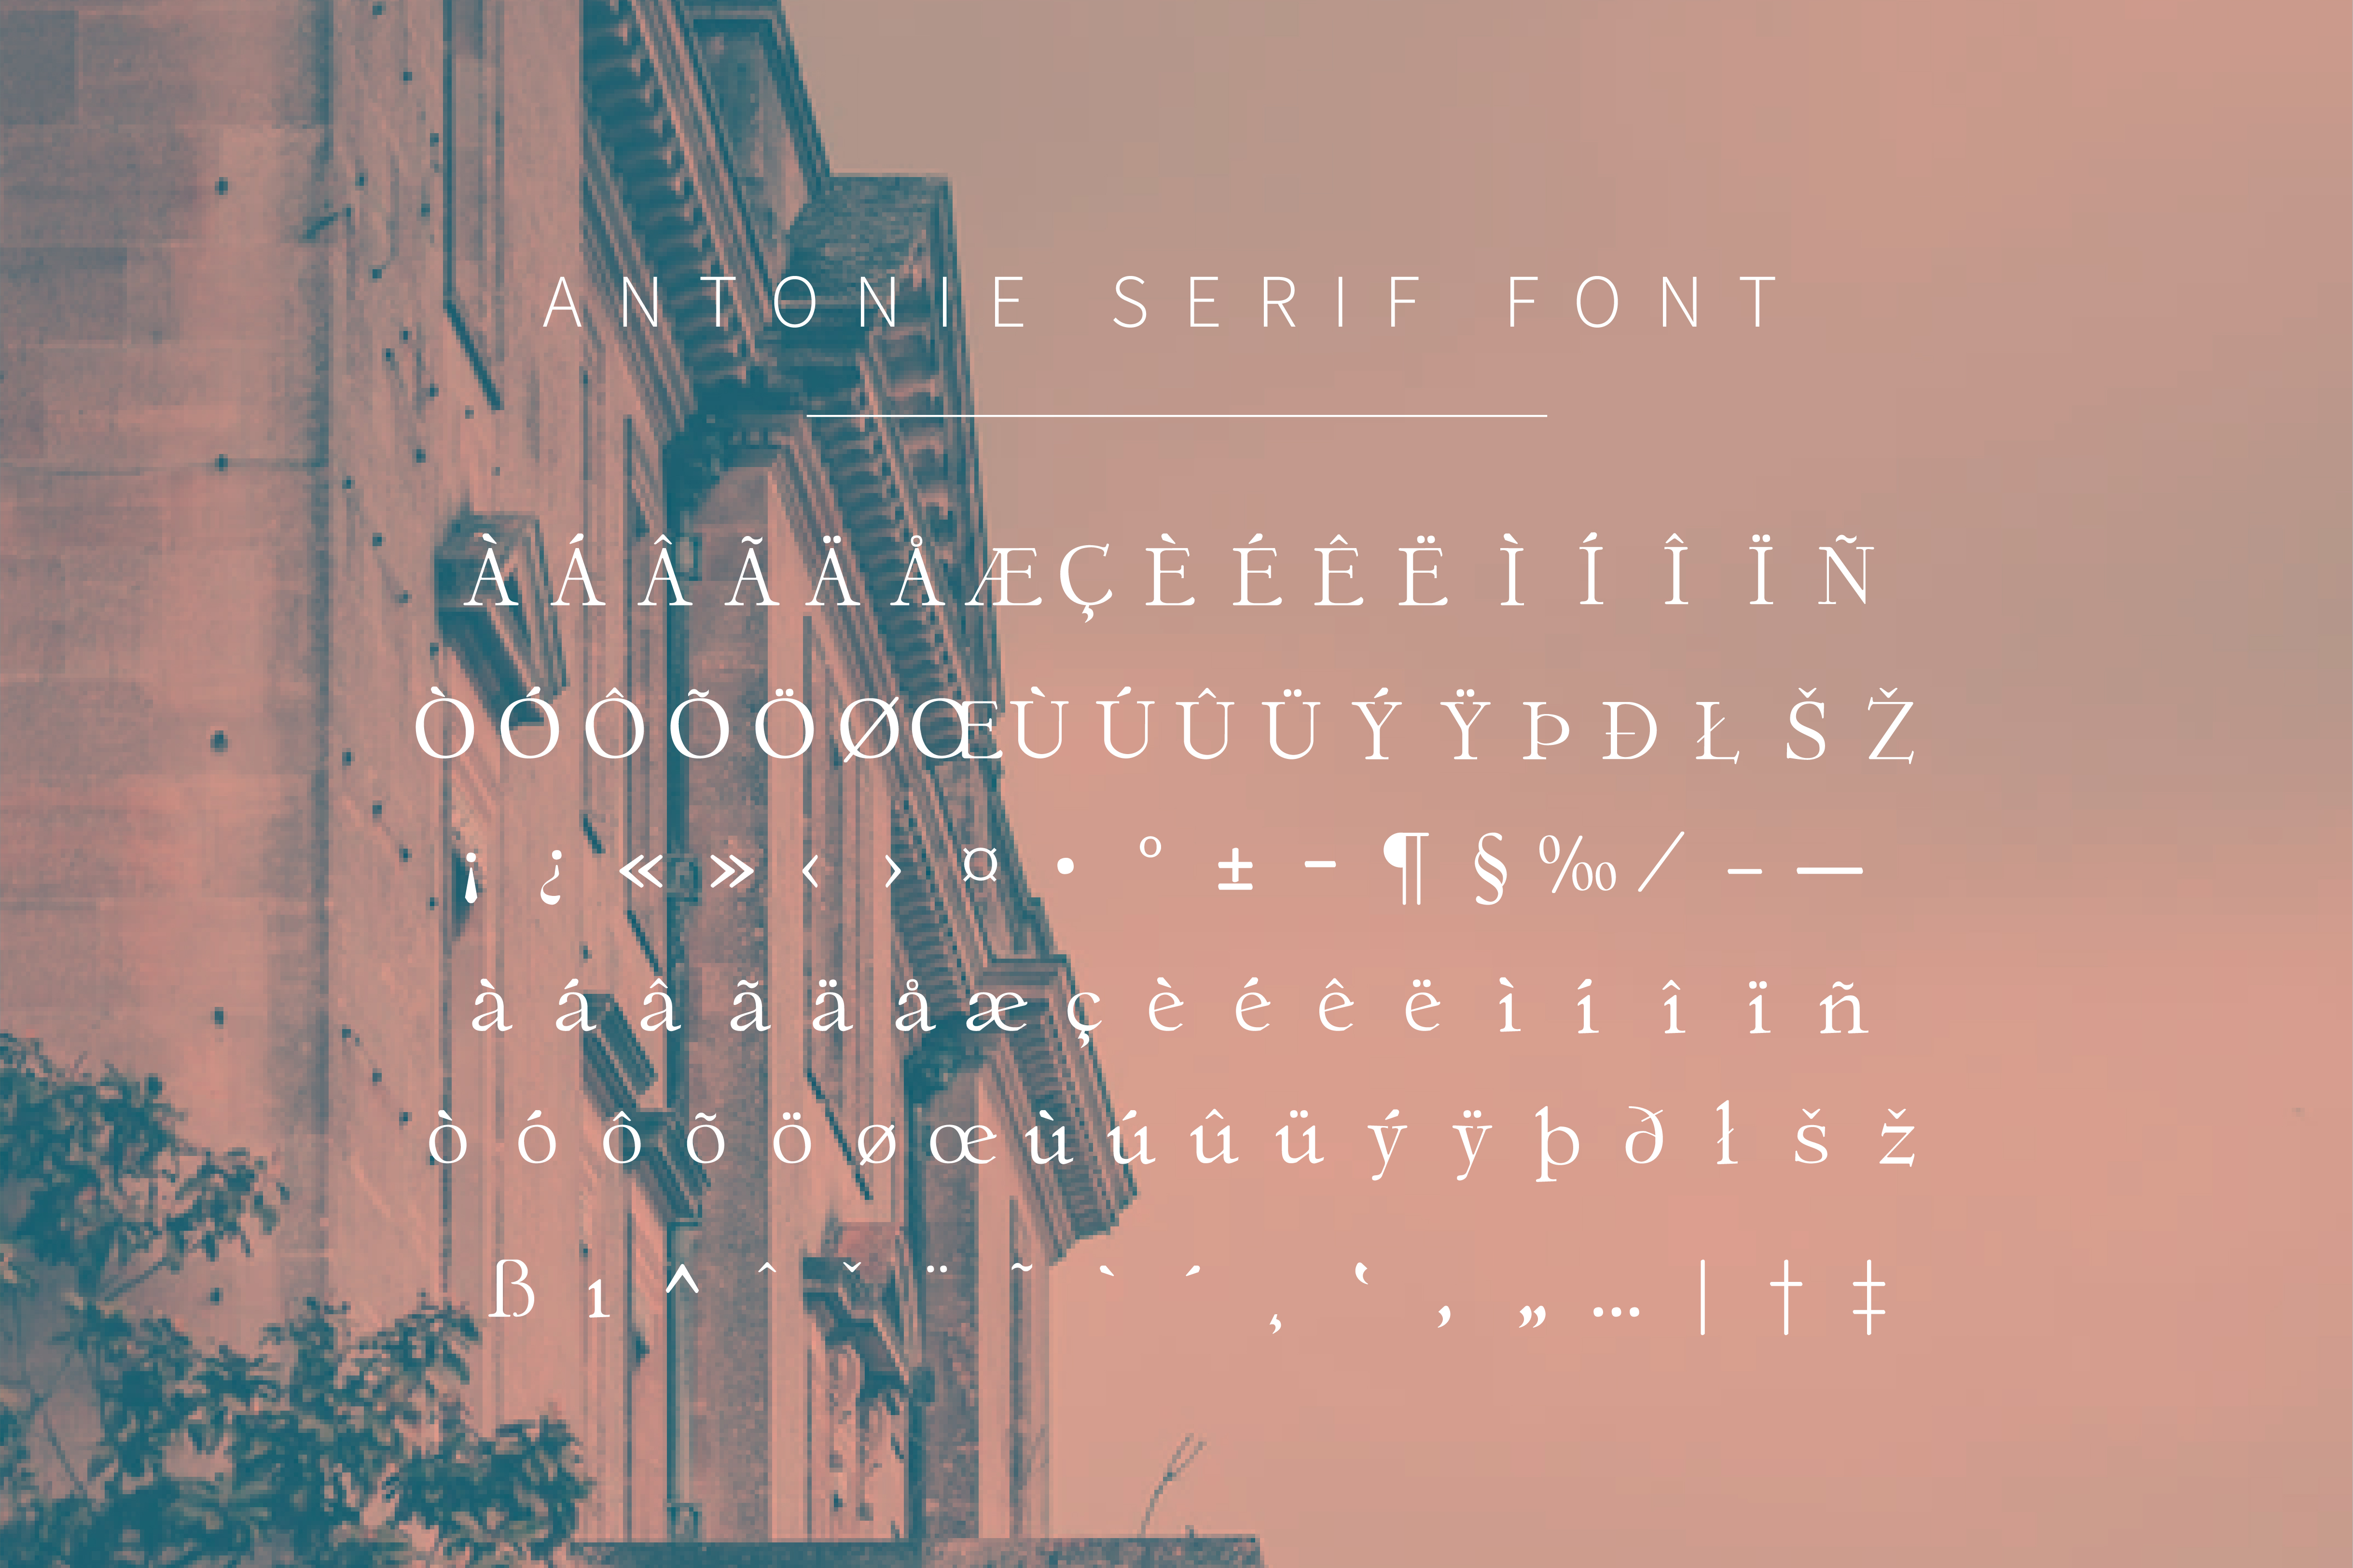 Antonie Classic Serif Font By Typefactoryco Graphicriver